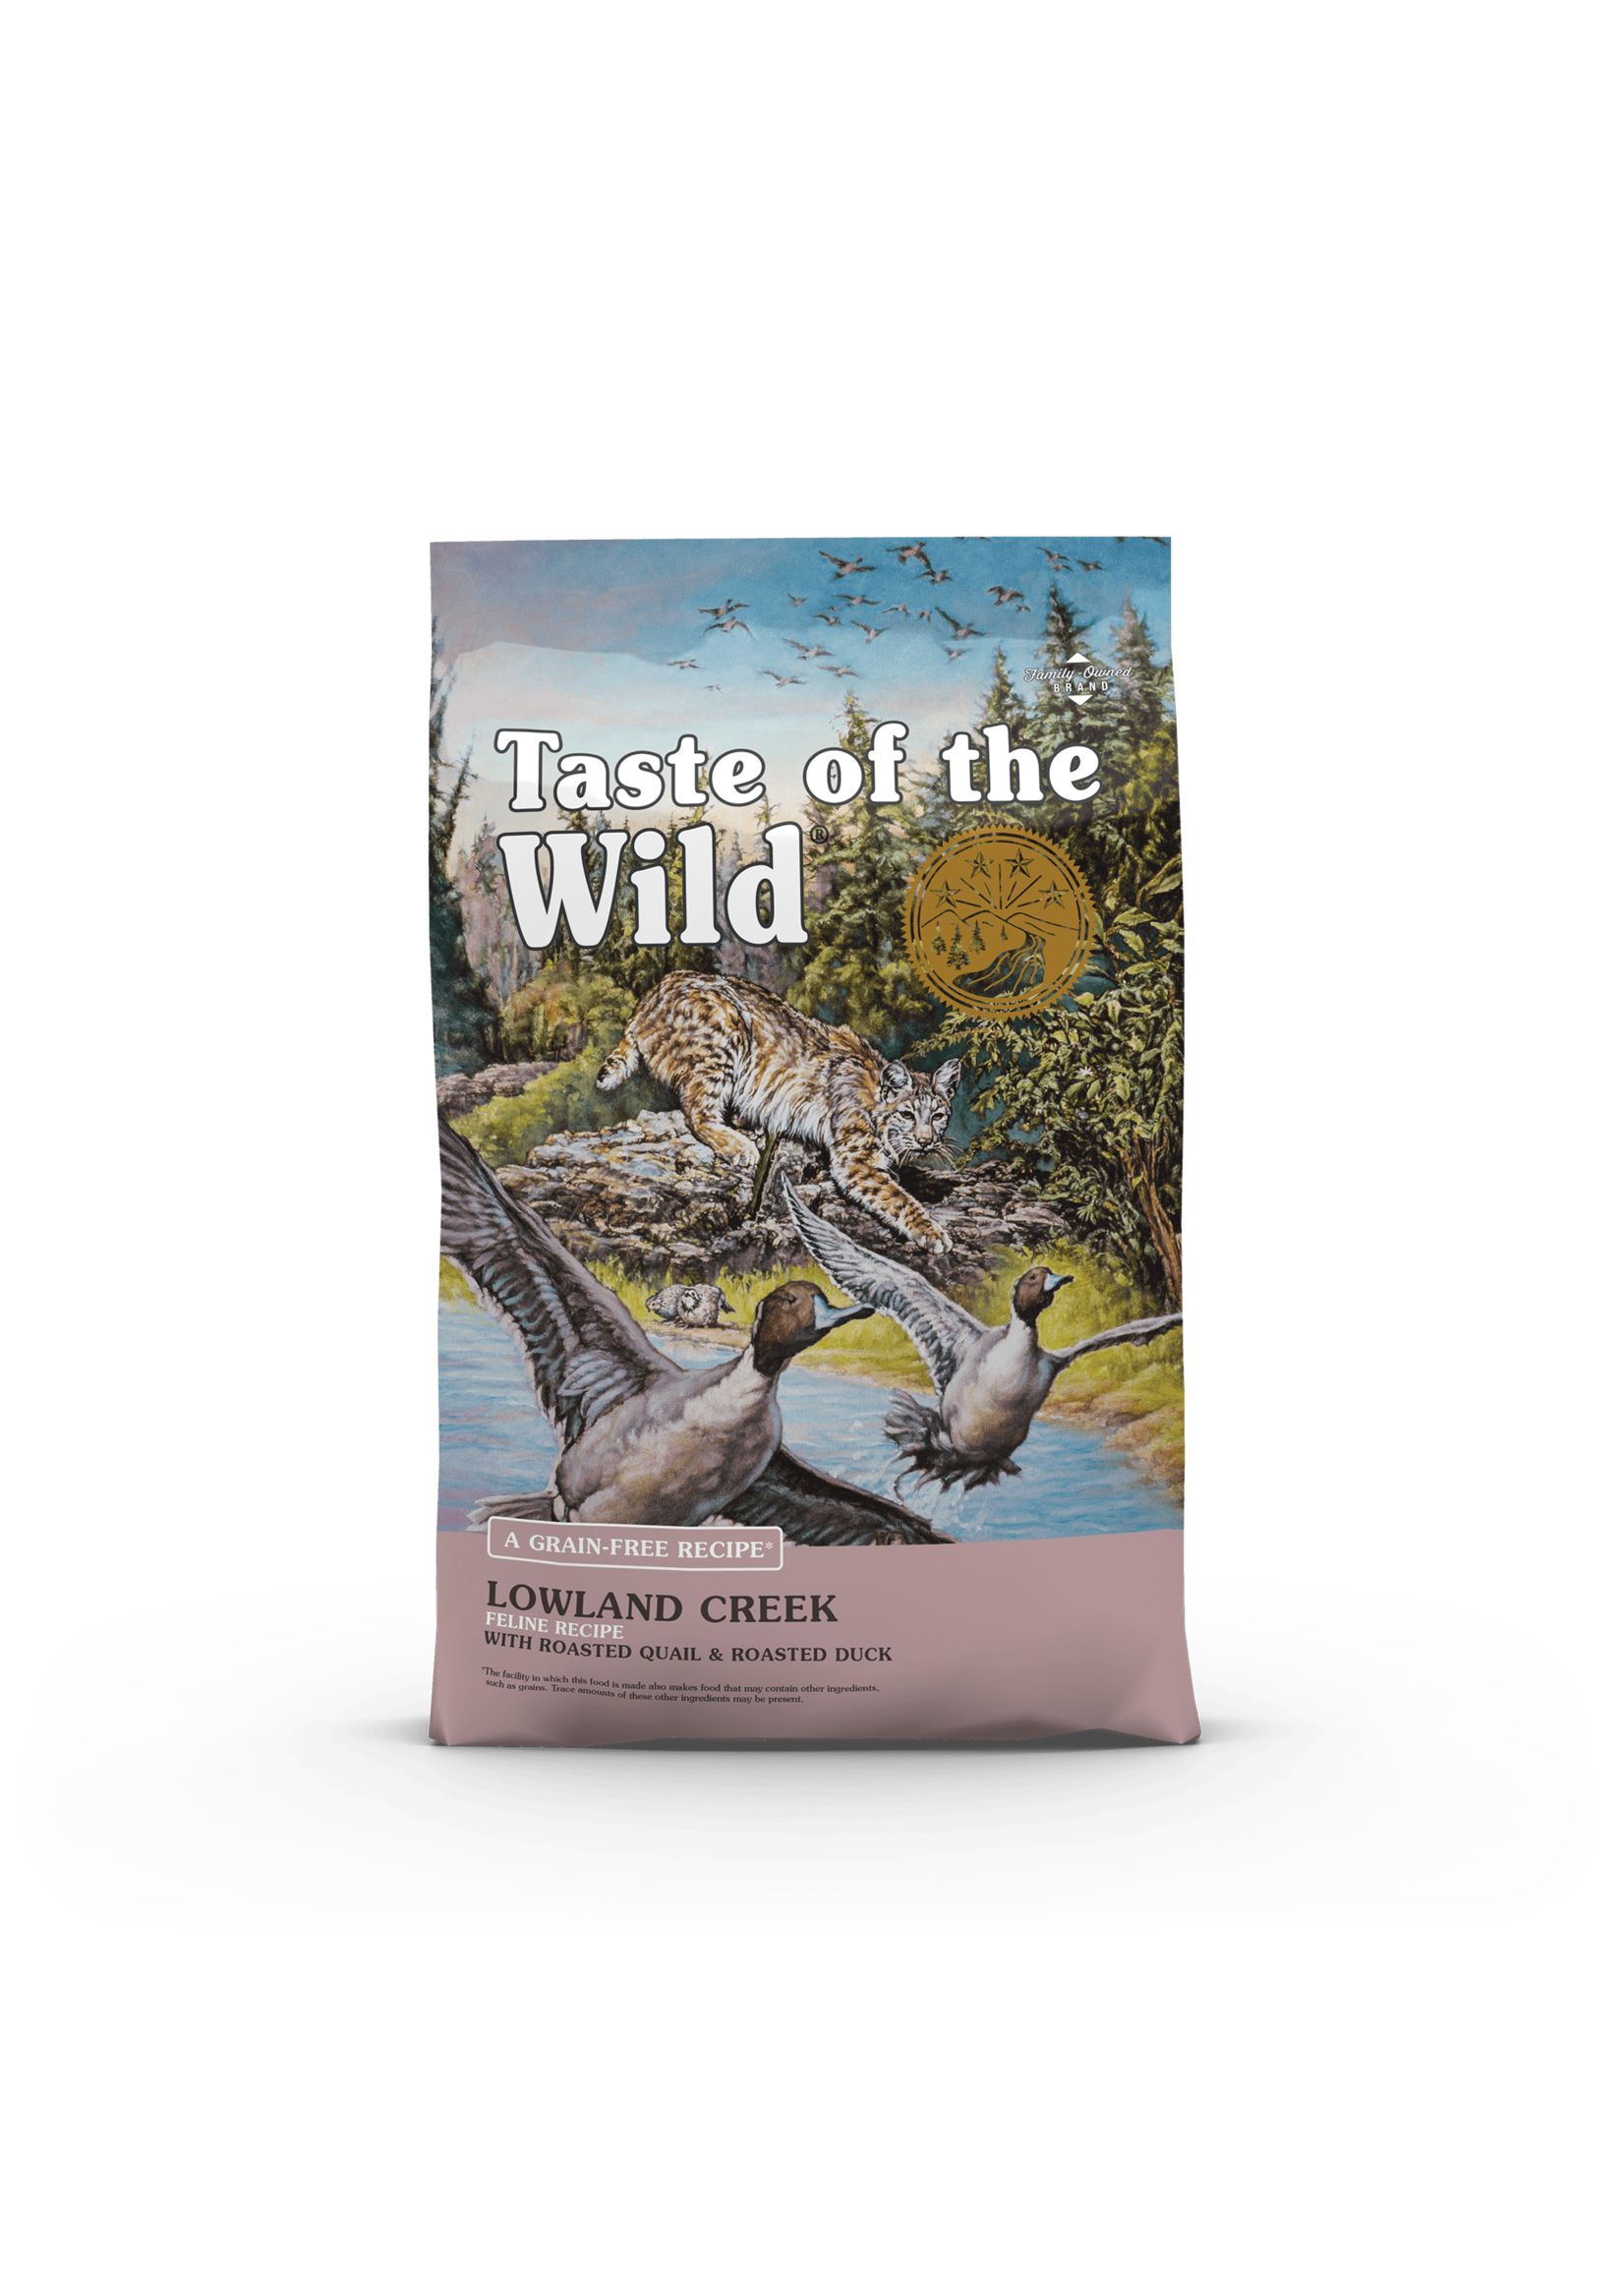 Taste of the Wild Taste of the Wild Lowland Creek Cat Food